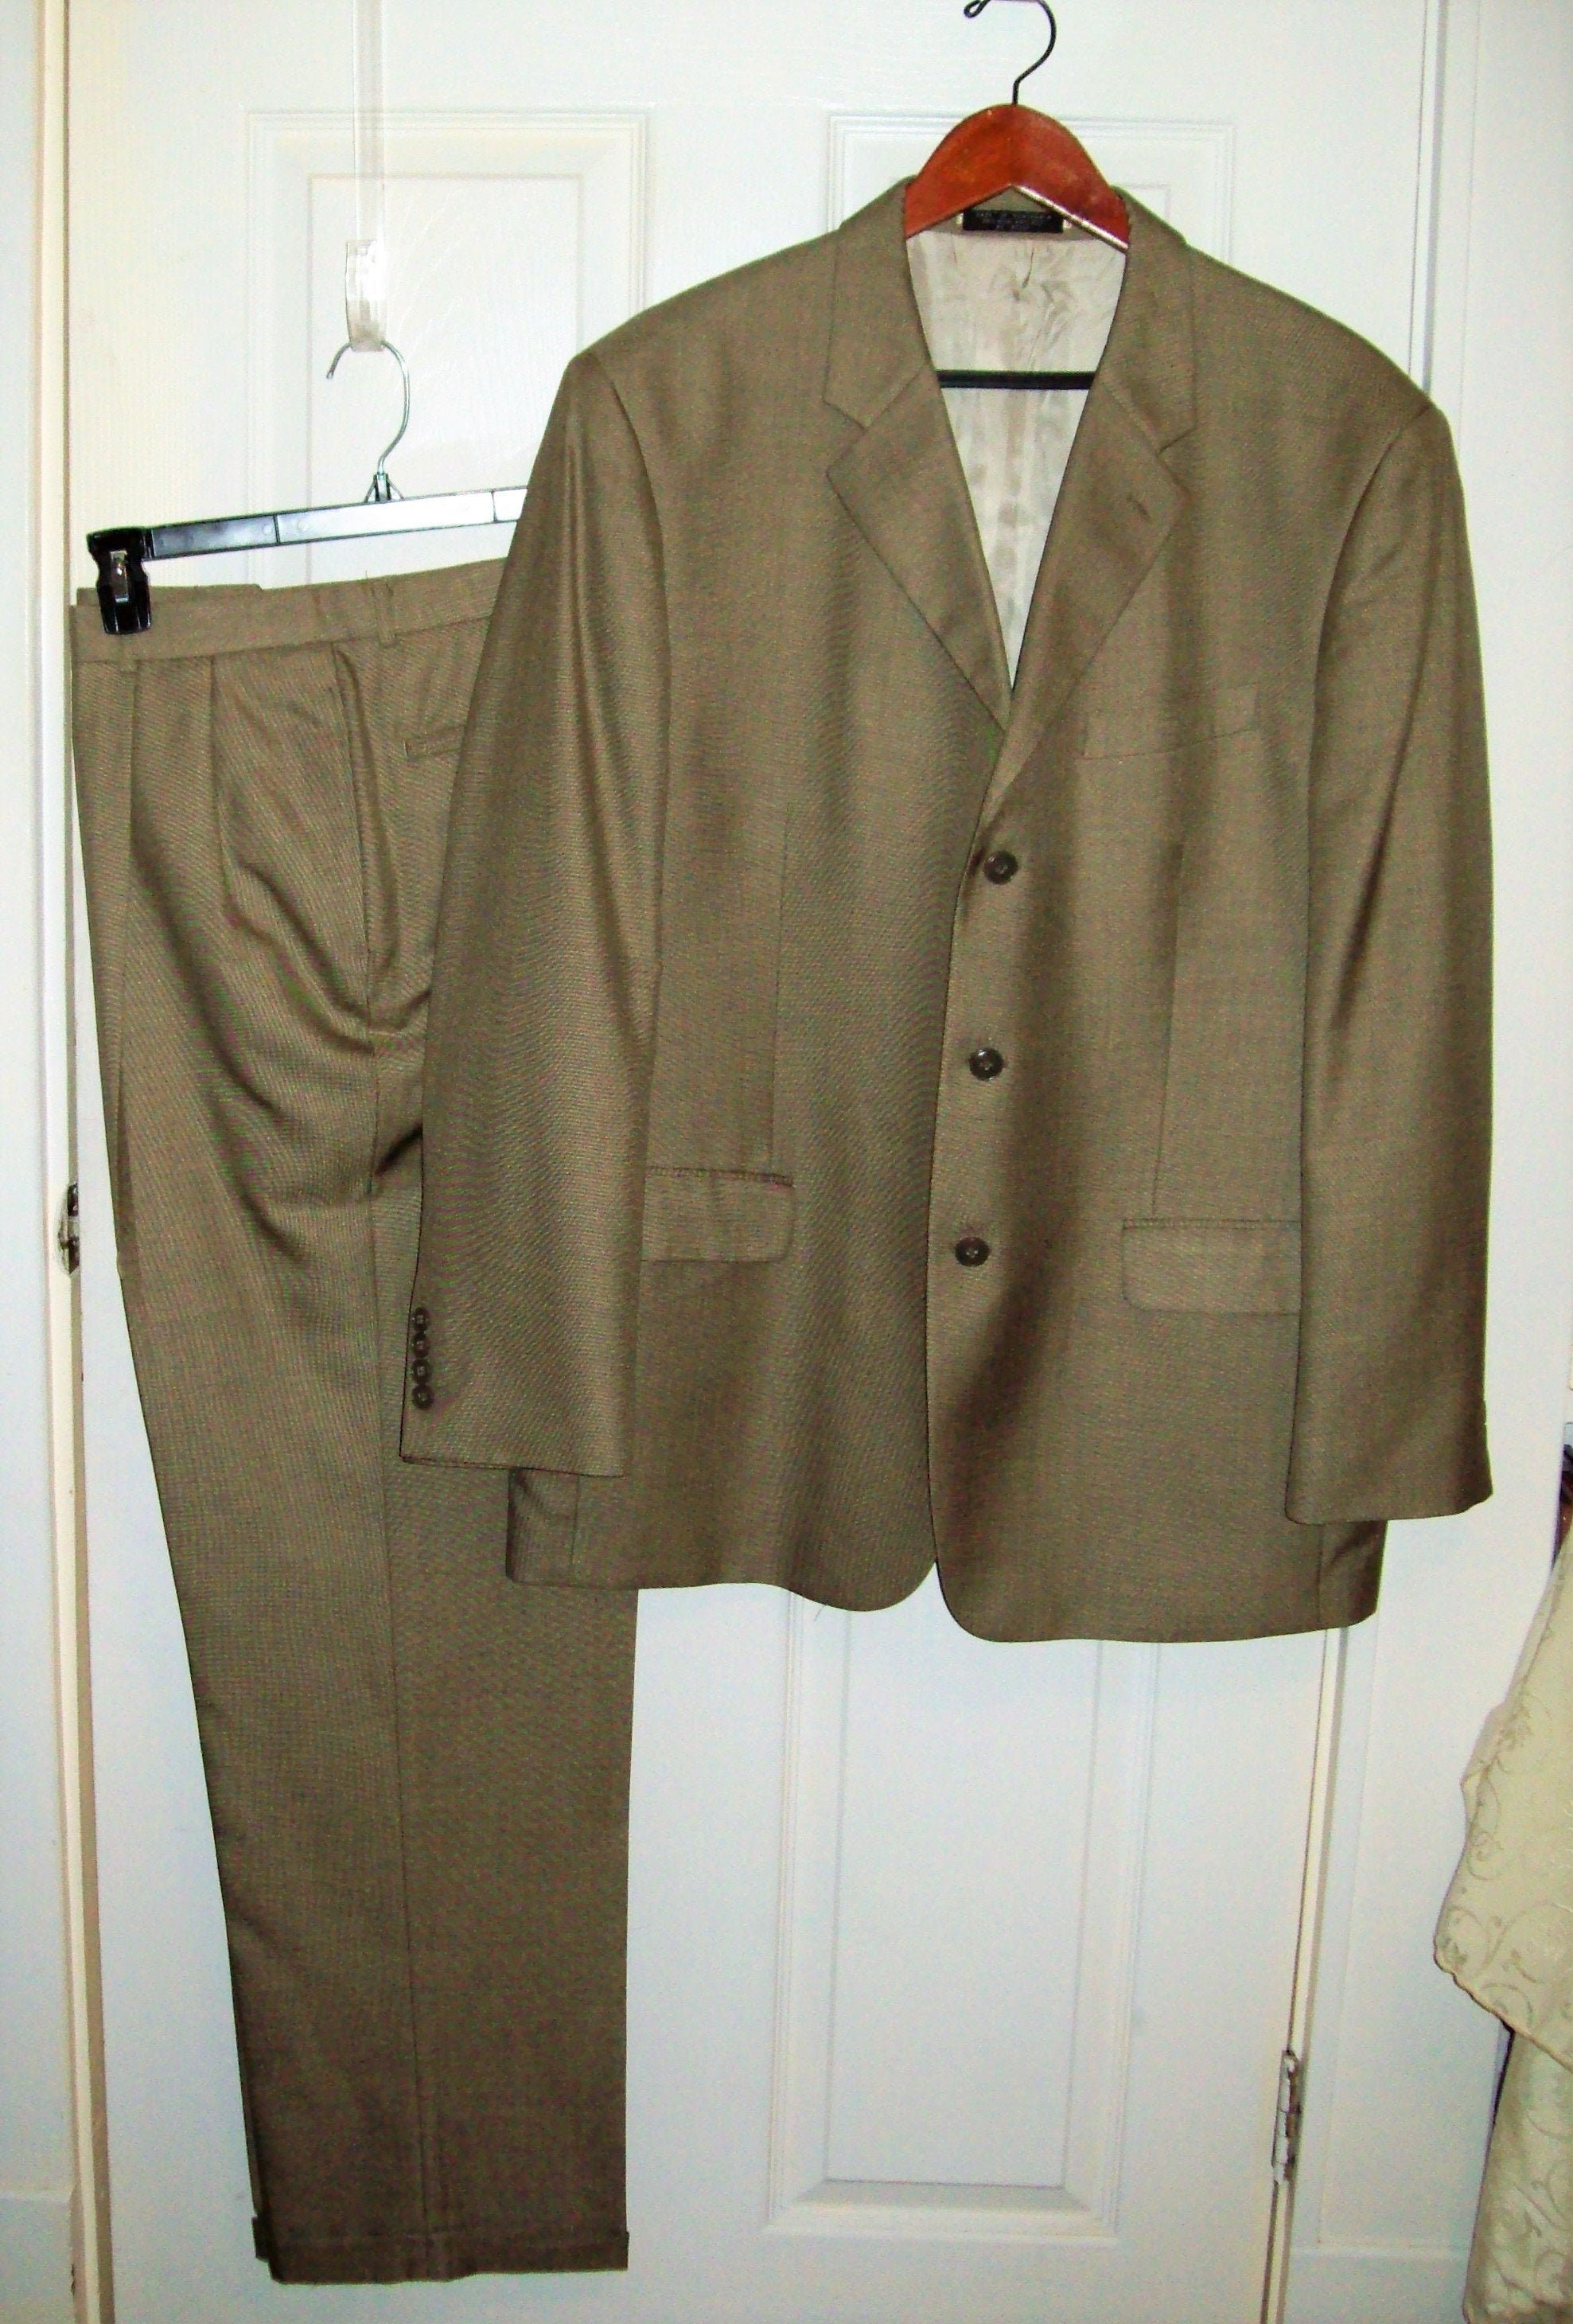 Vintage Men's Wool Silk Blend Suit By Jones New York 44 R Cuffed Slacks 36 Waist Pants Only 26 Usd